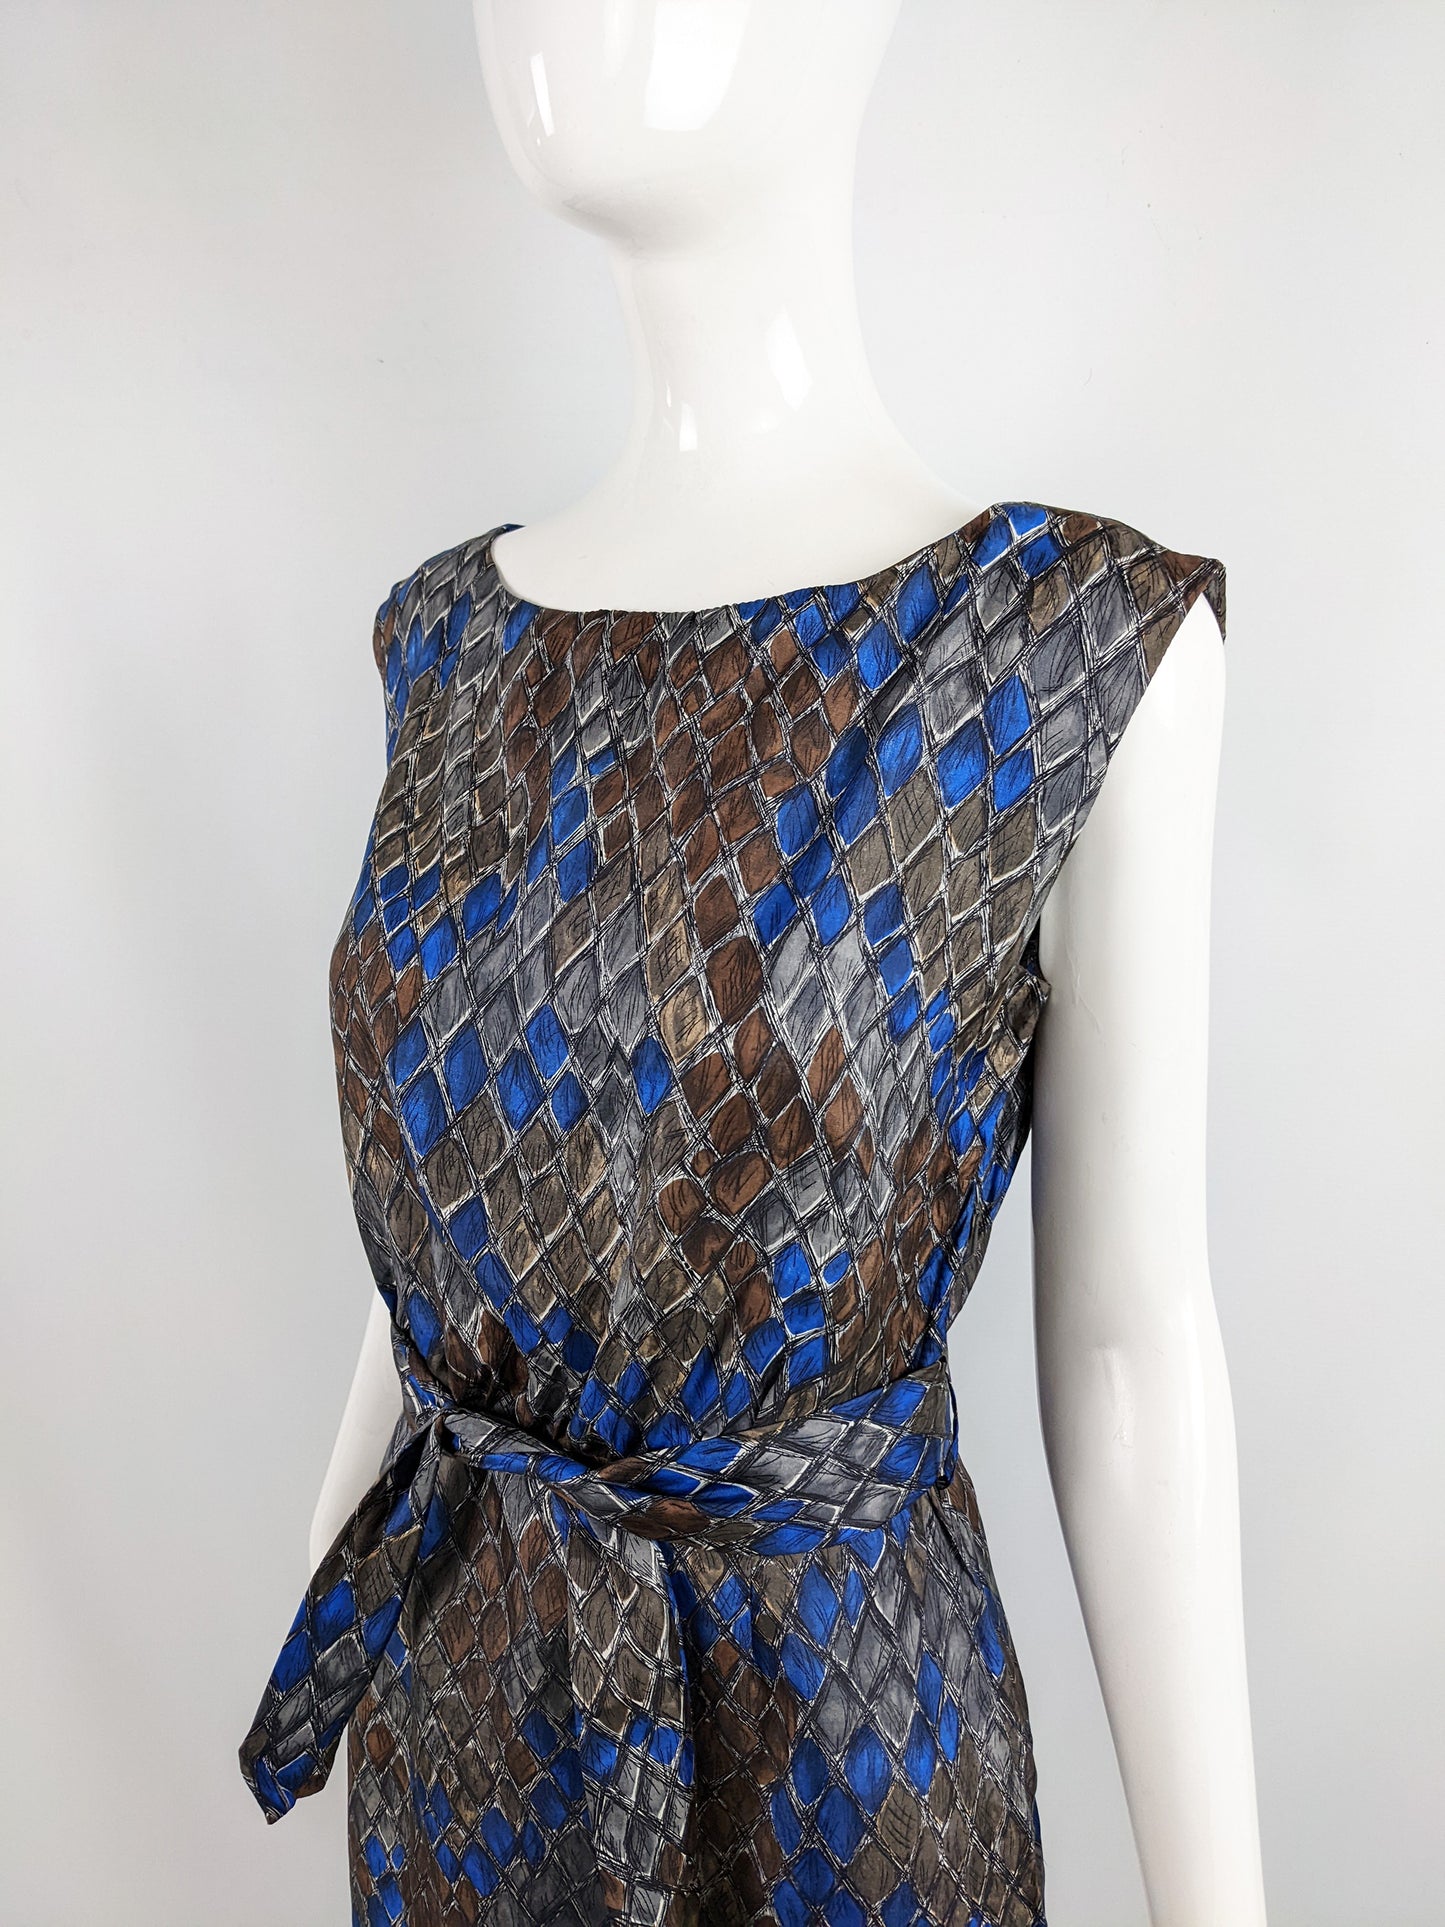 Vintage 50s Silk Party Dress with Blue & Brown Diamond Print, 1950s